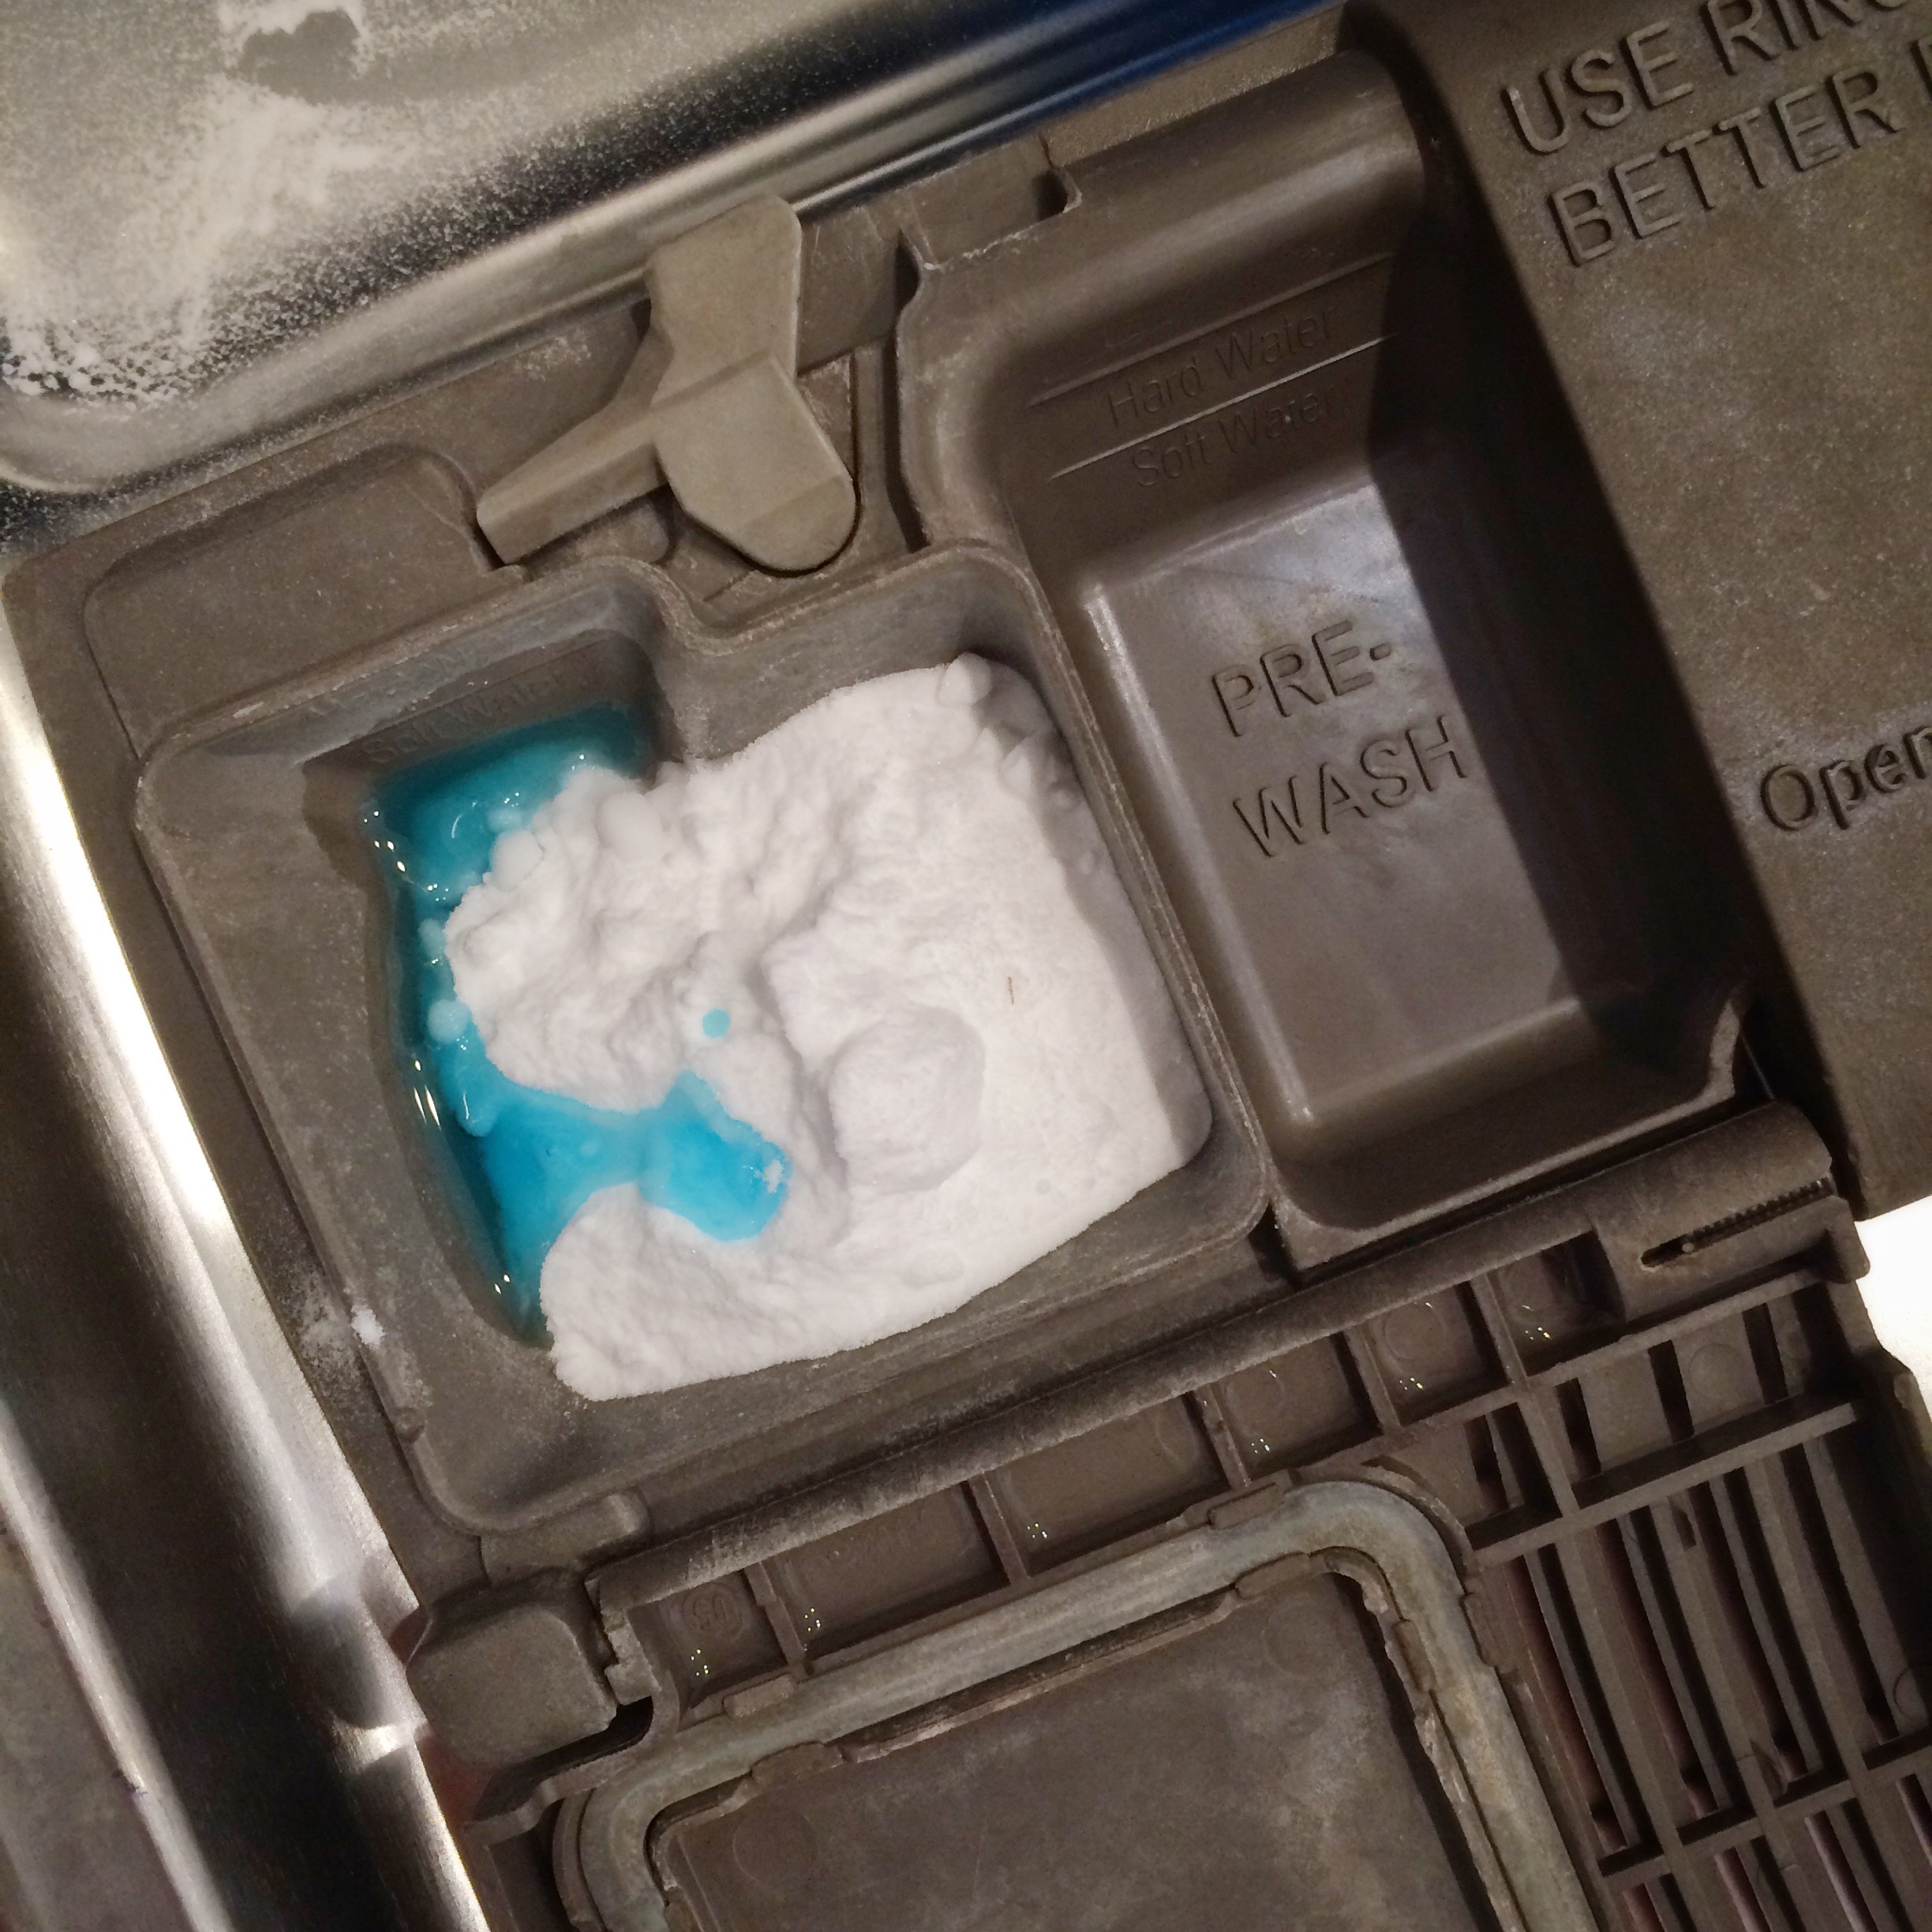 Dishwashing Detergent Hack! Two